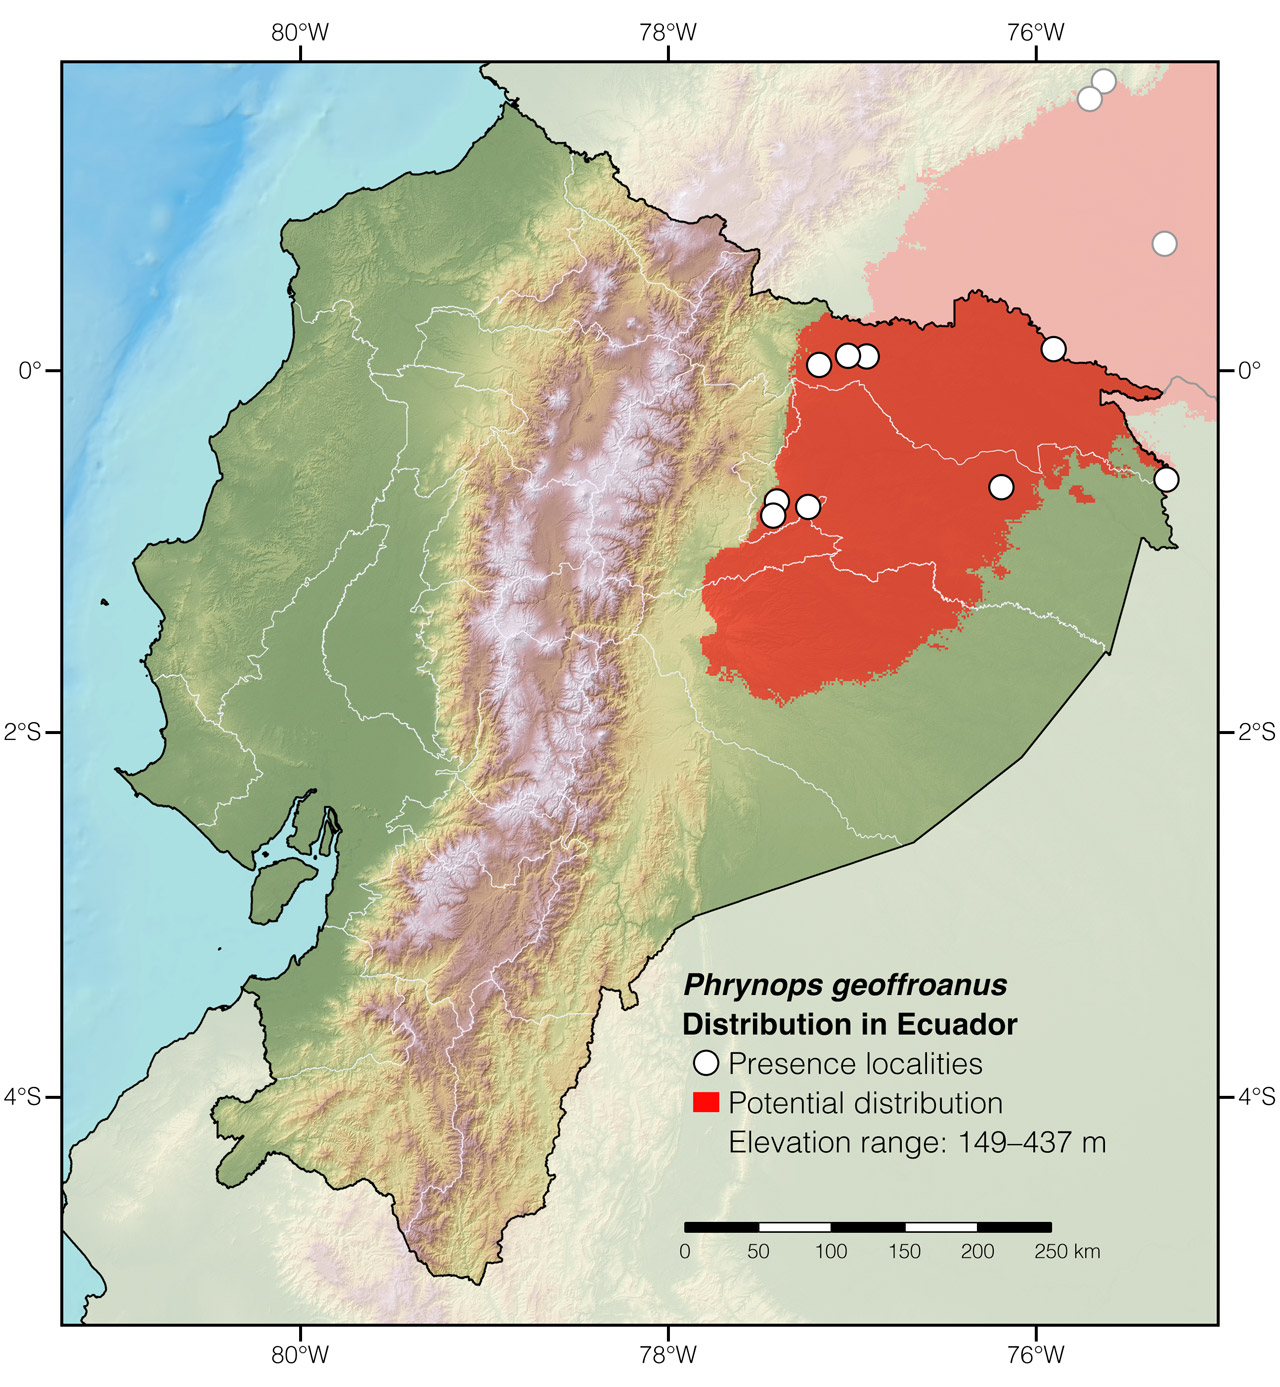 Distribution of Phrynops geoffroanus in Ecuador